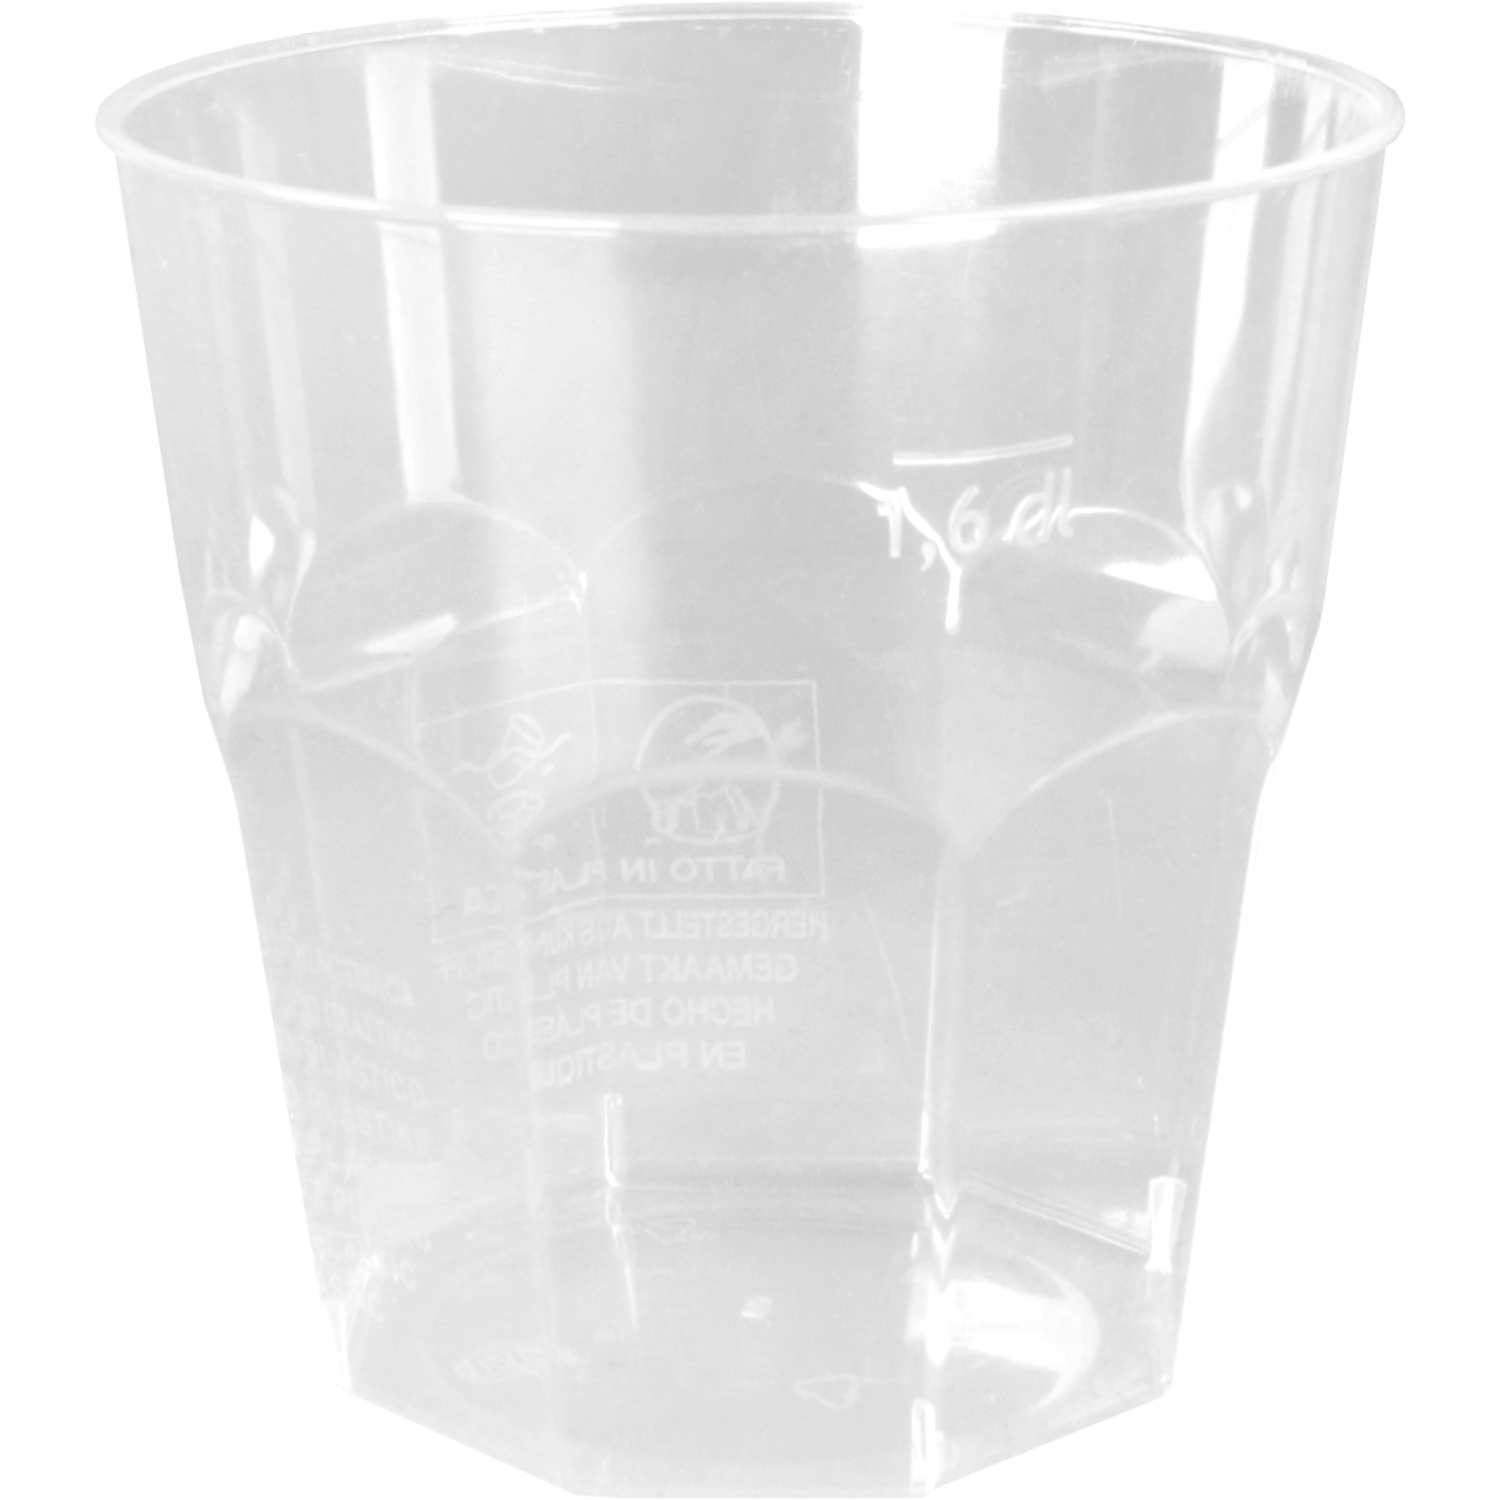 Goldplast Glas, brasserieglas, reusable, pS, 160ml, transparant 1